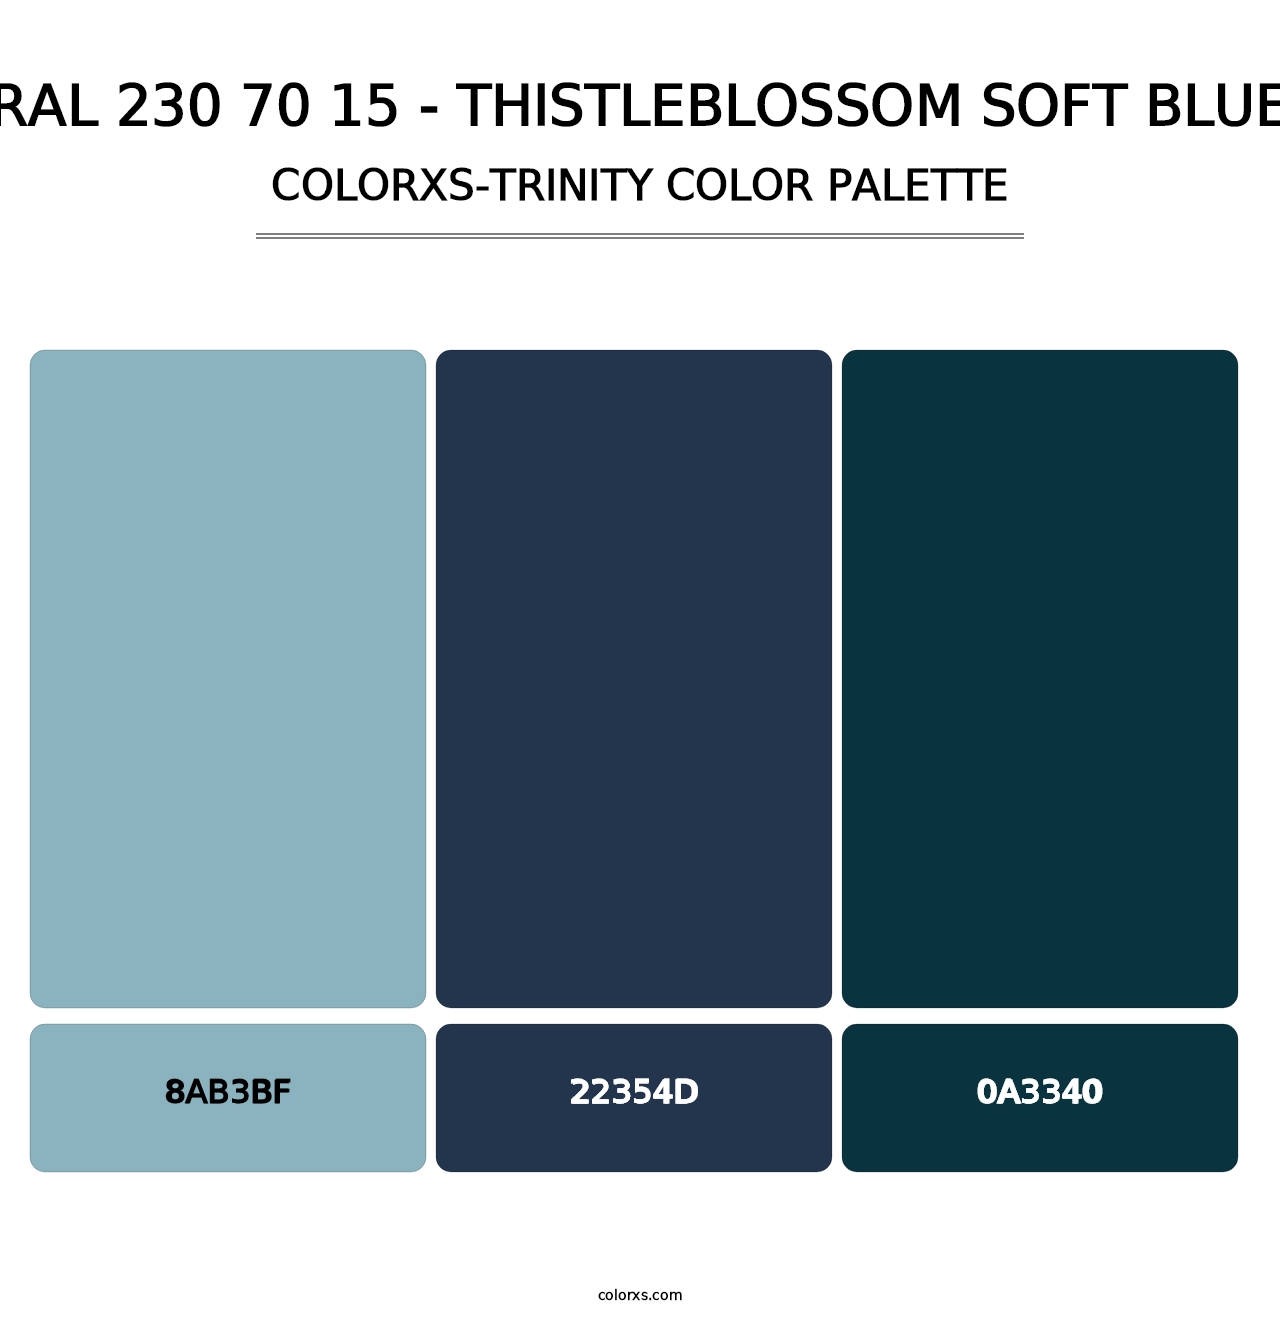 RAL 230 70 15 - Thistleblossom Soft Blue - Colorxs Trinity Palette